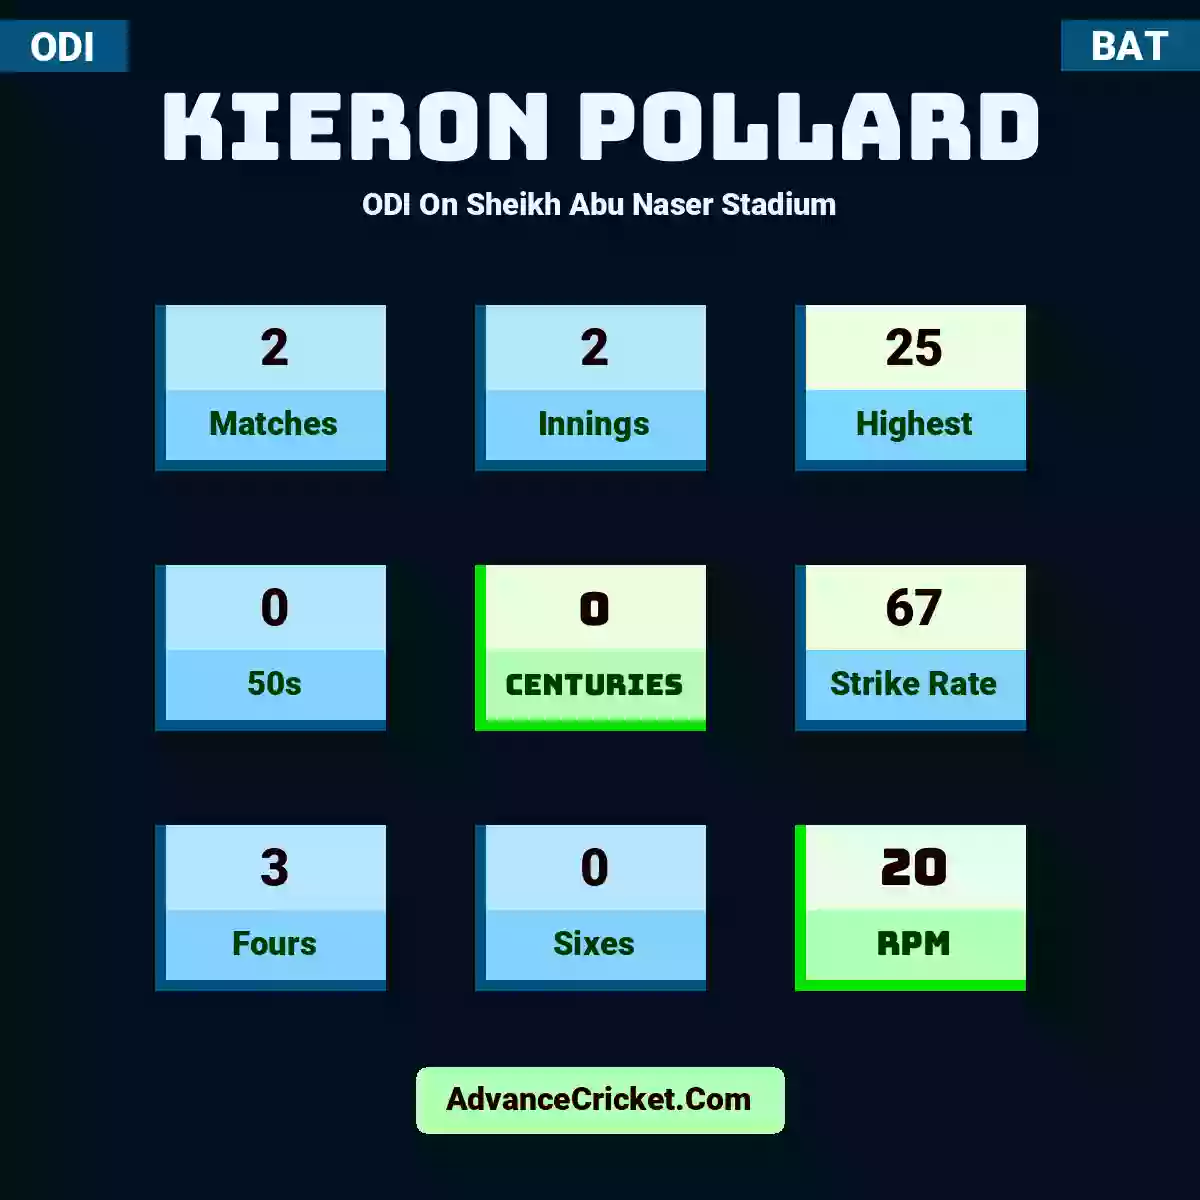 Kieron Pollard ODI  On Sheikh Abu Naser Stadium, Kieron Pollard played 2 matches, scored 25 runs as highest, 0 half-centuries, and 0 centuries, with a strike rate of 67. K.Pollard hit 3 fours and 0 sixes, with an RPM of 20.